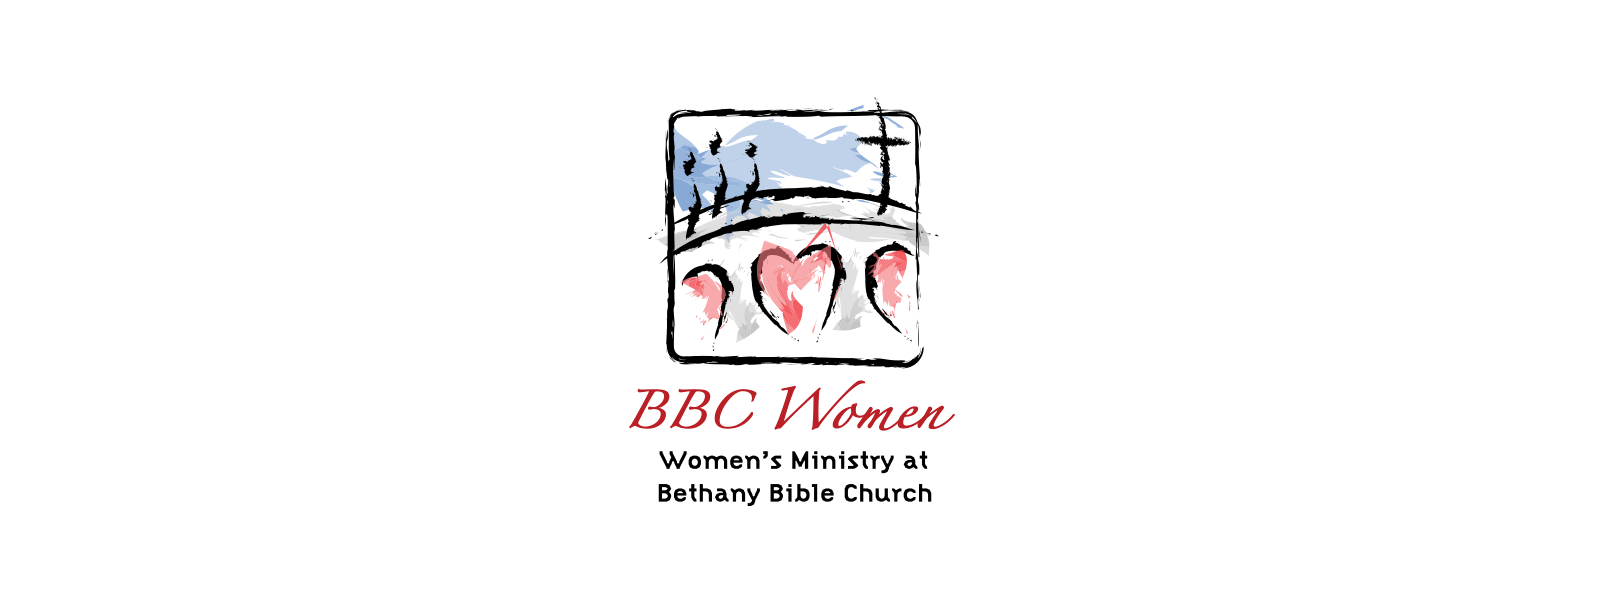 BBC Women logo